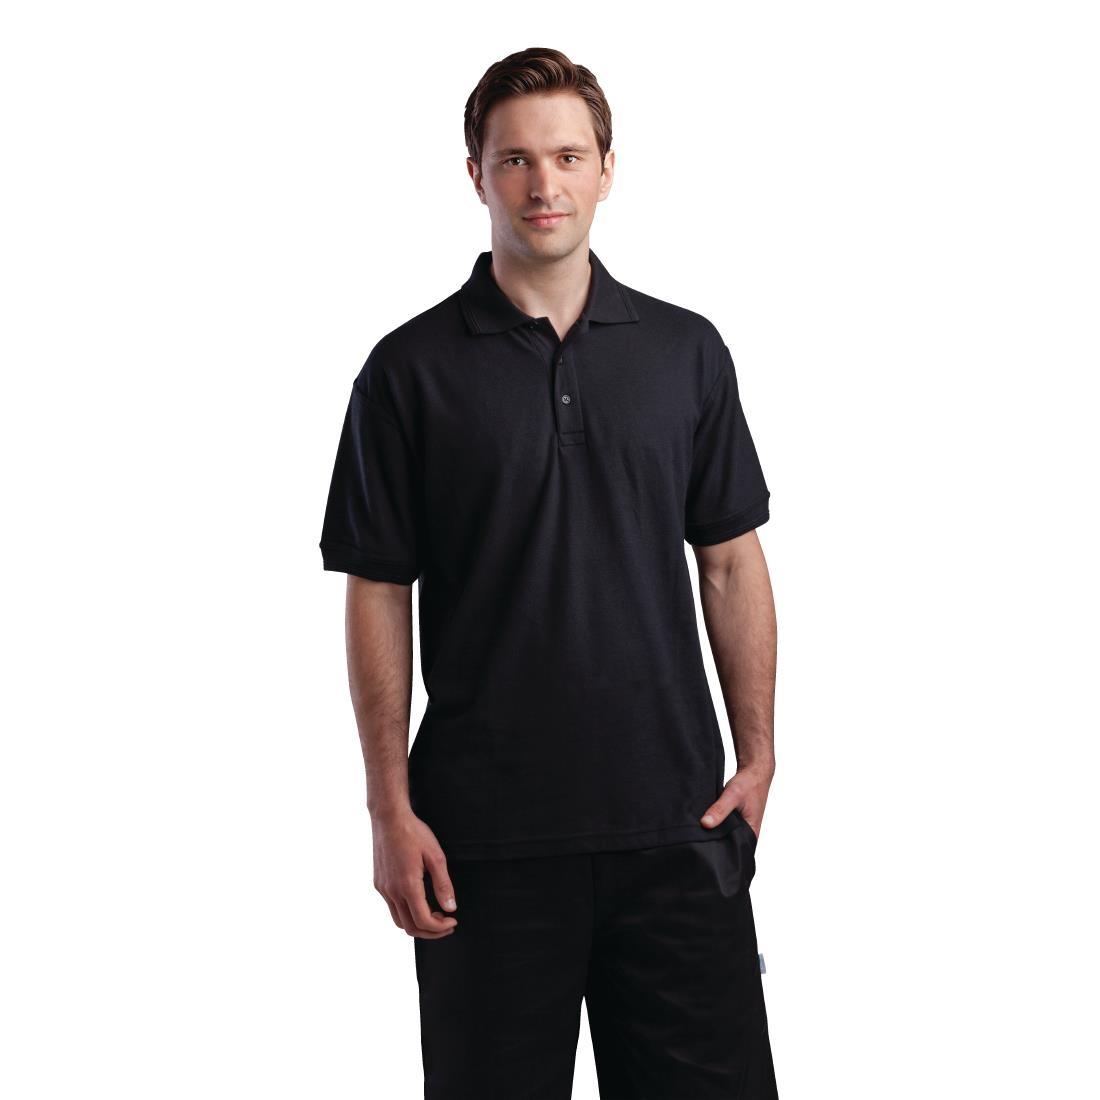 Unisex Polo Shirt Black XL - A735-XL  - 1